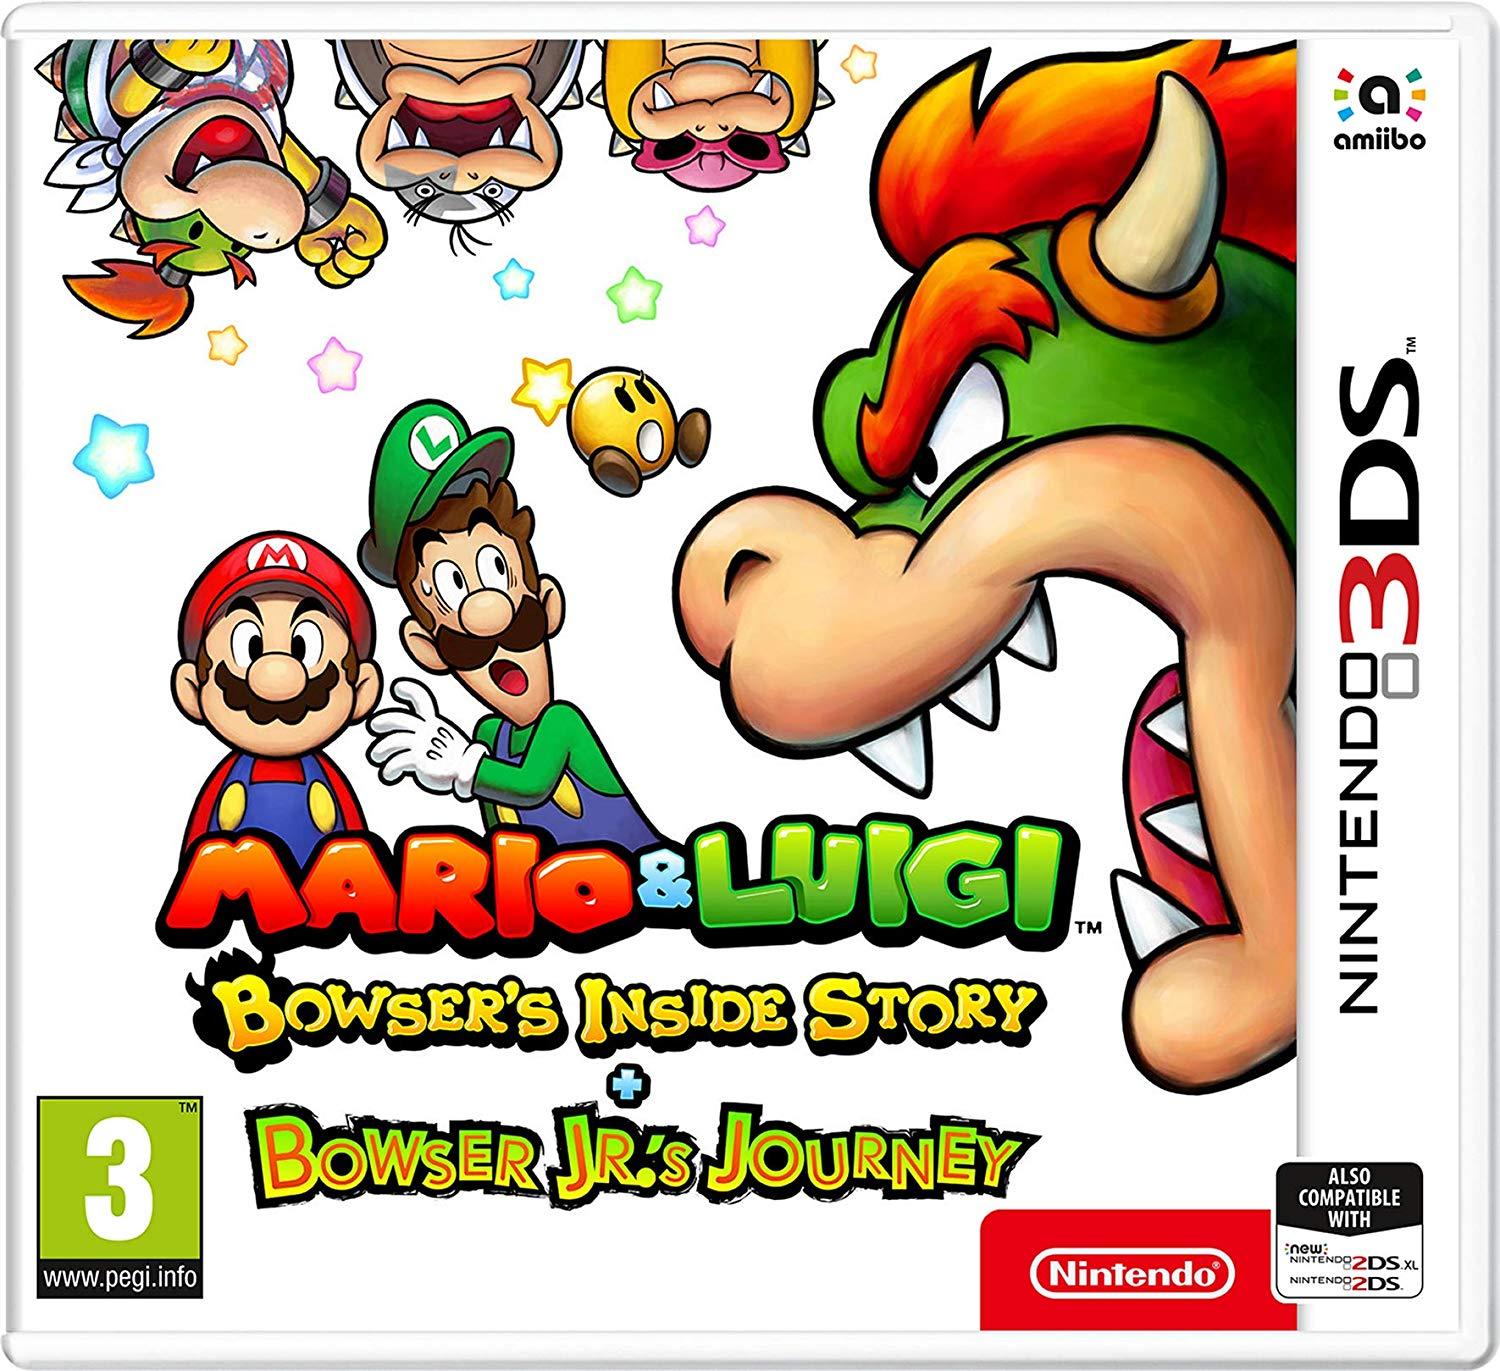 3DS Mario & Luigi: Bowser's Inside Story + Bowser Jr.'s Journey